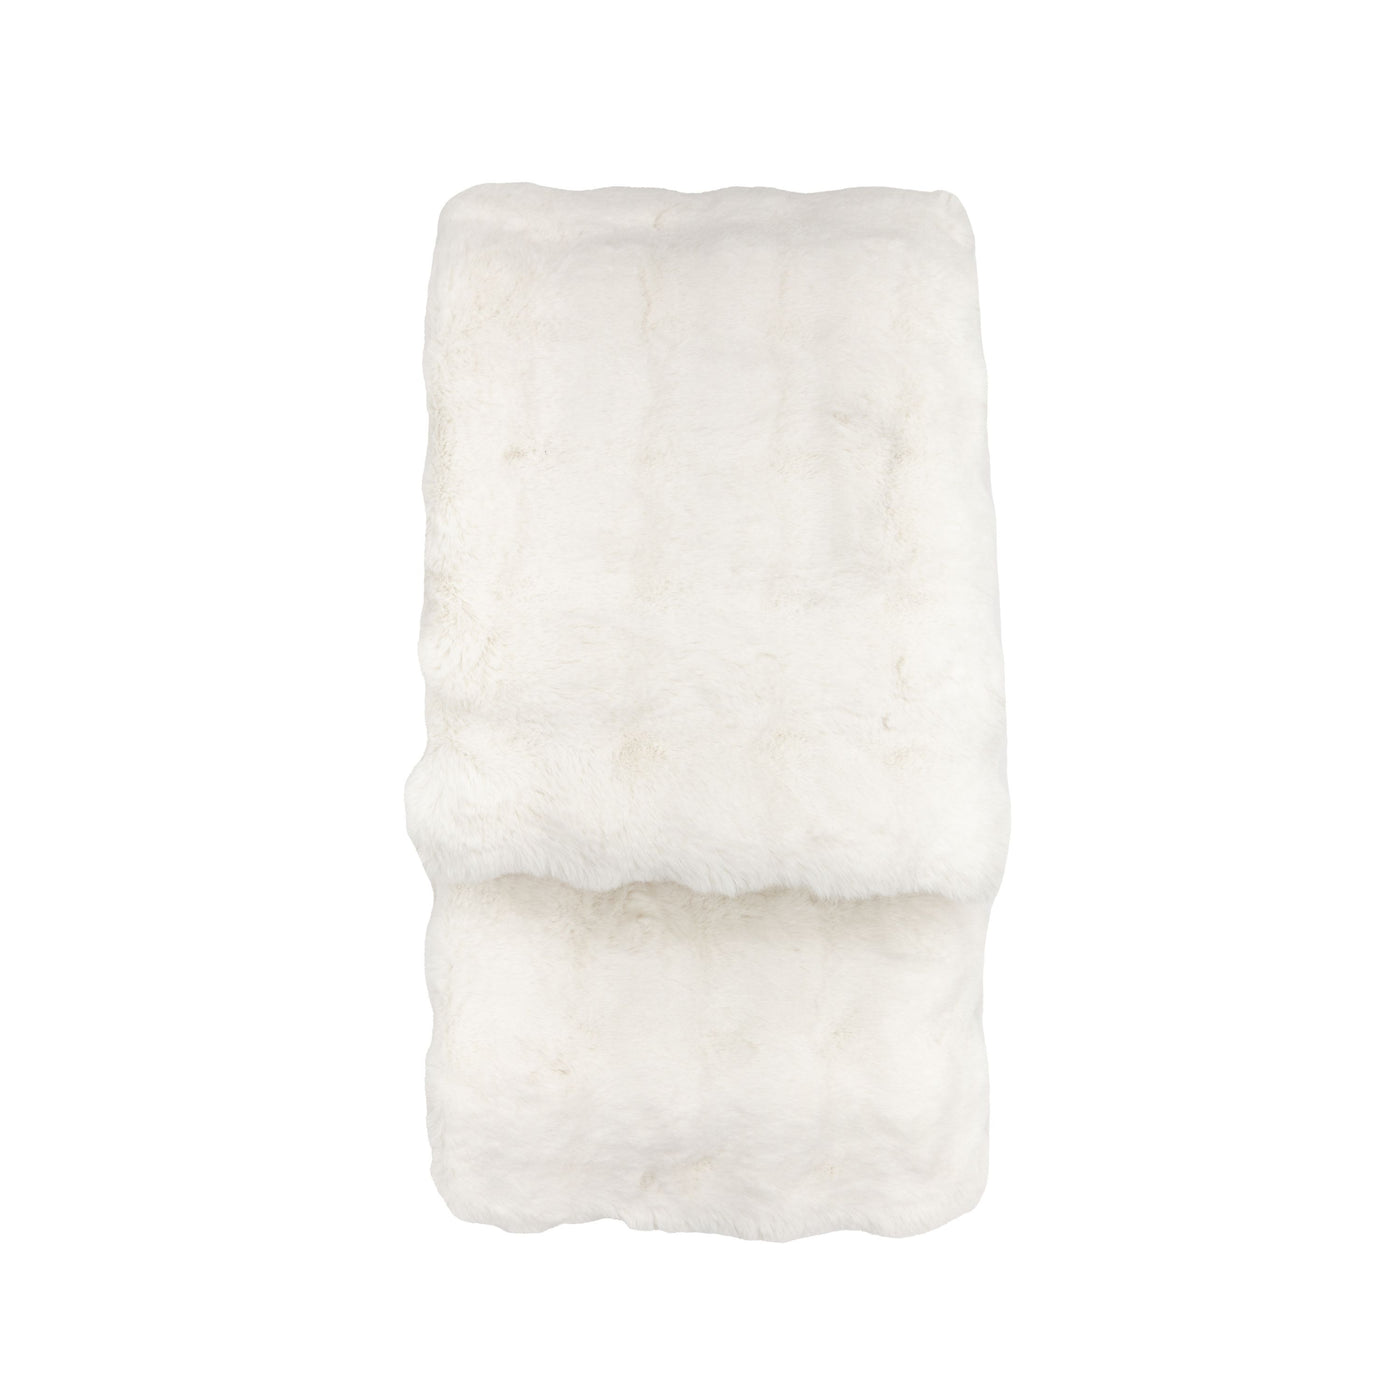 Marshmallow Rabbit Fur Throw Cream